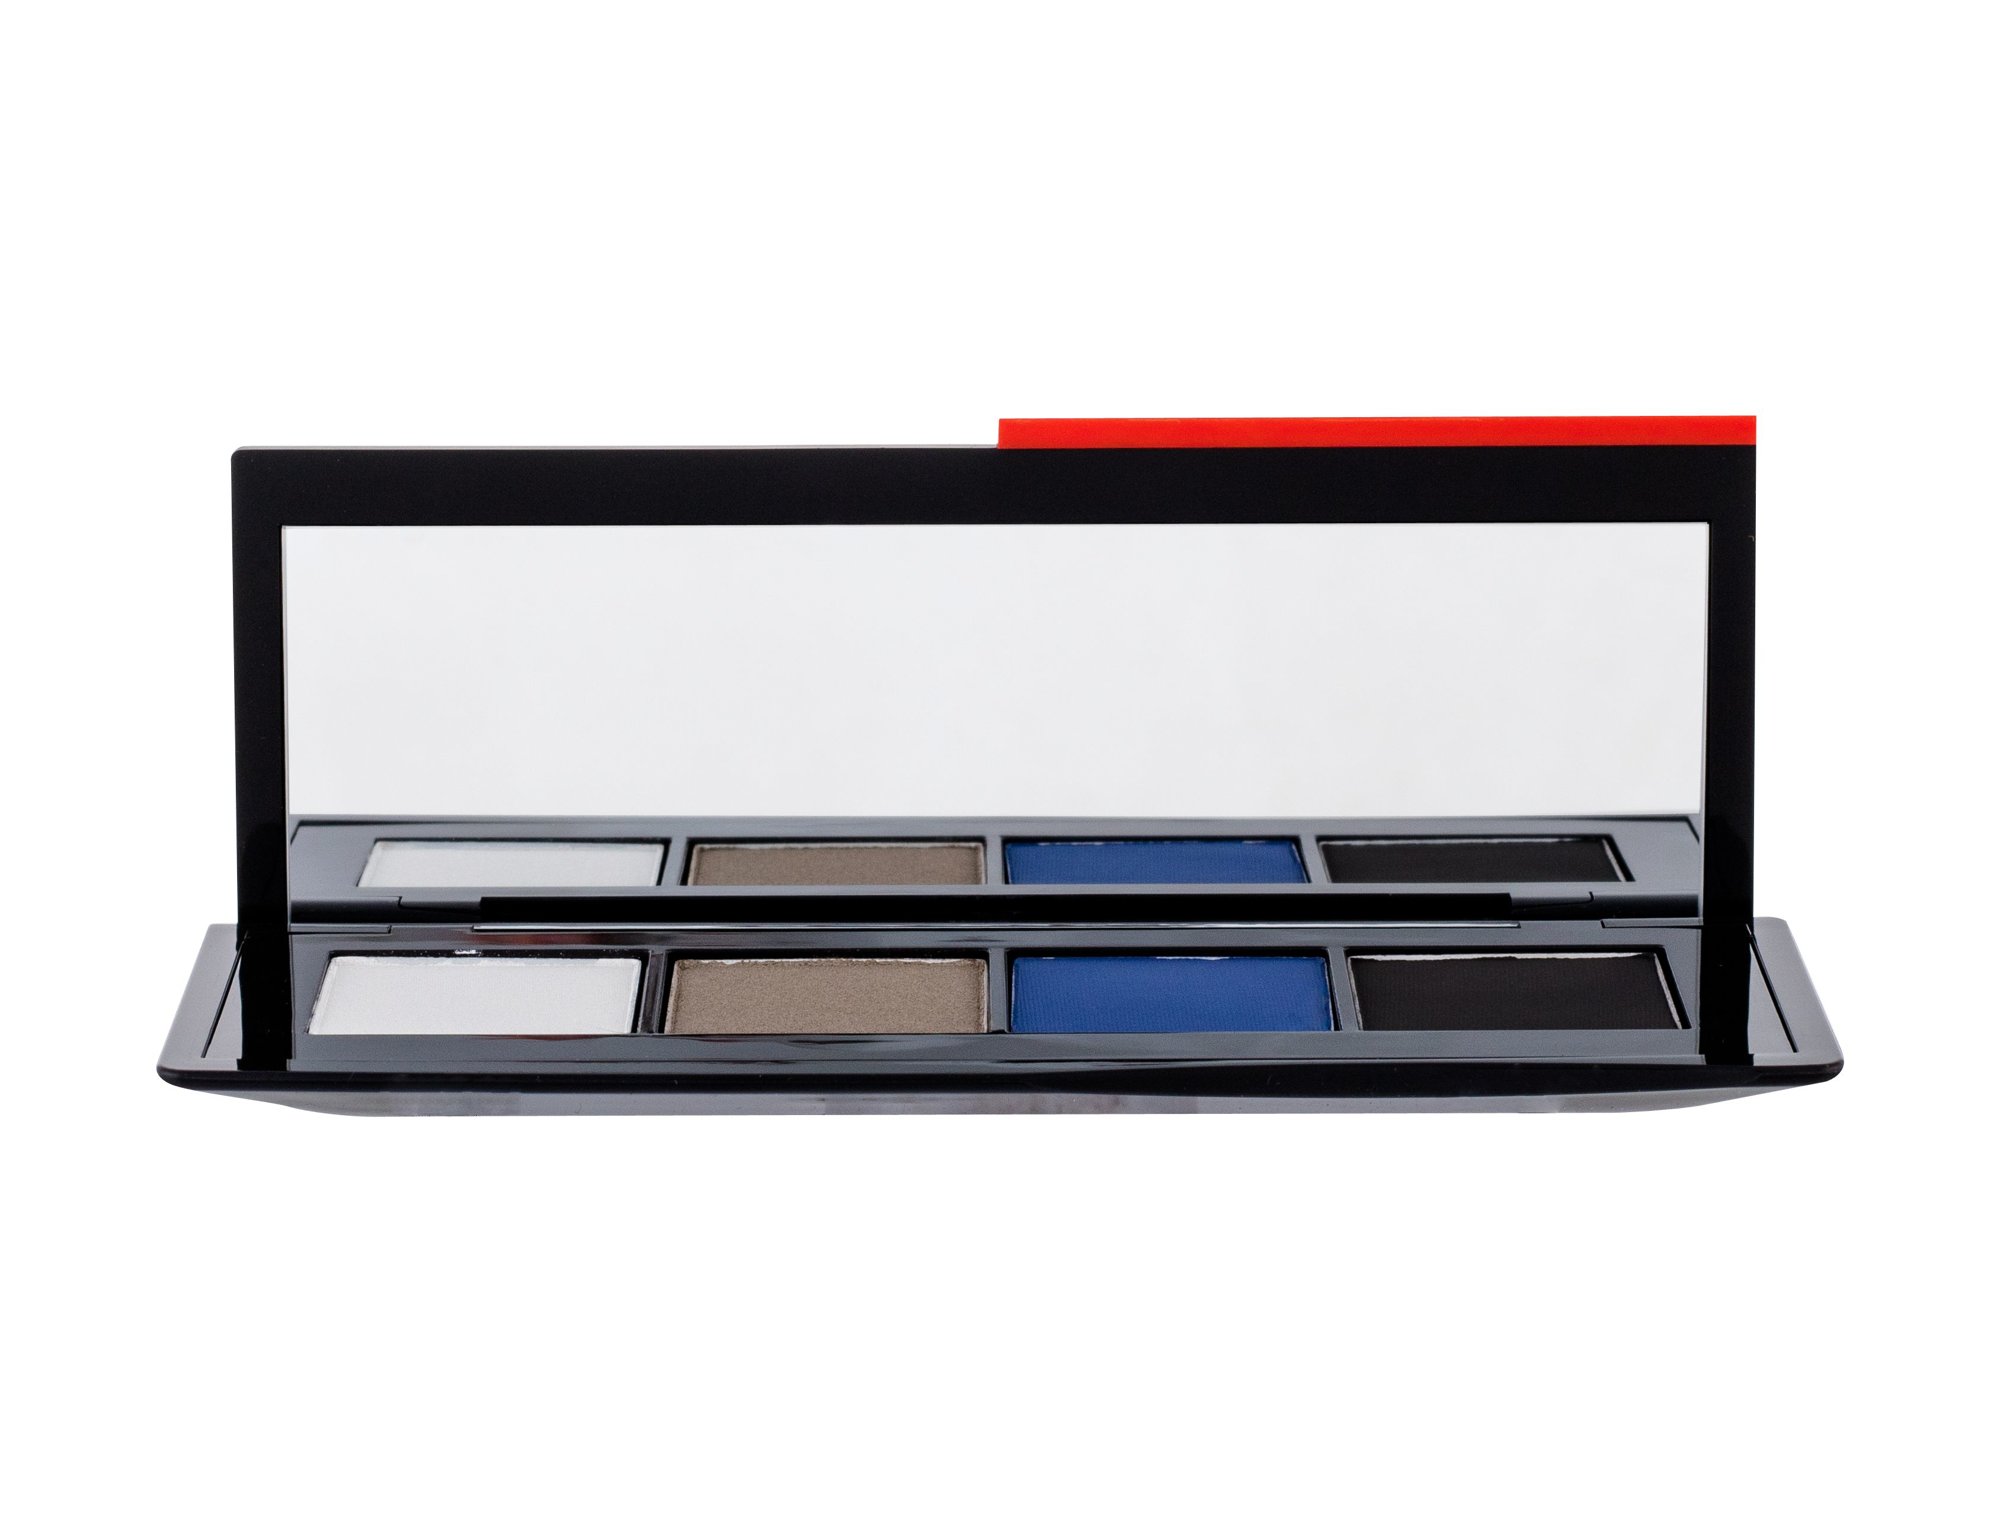 Shiseido Essentialist Eye Palette 5,2g šešėliai